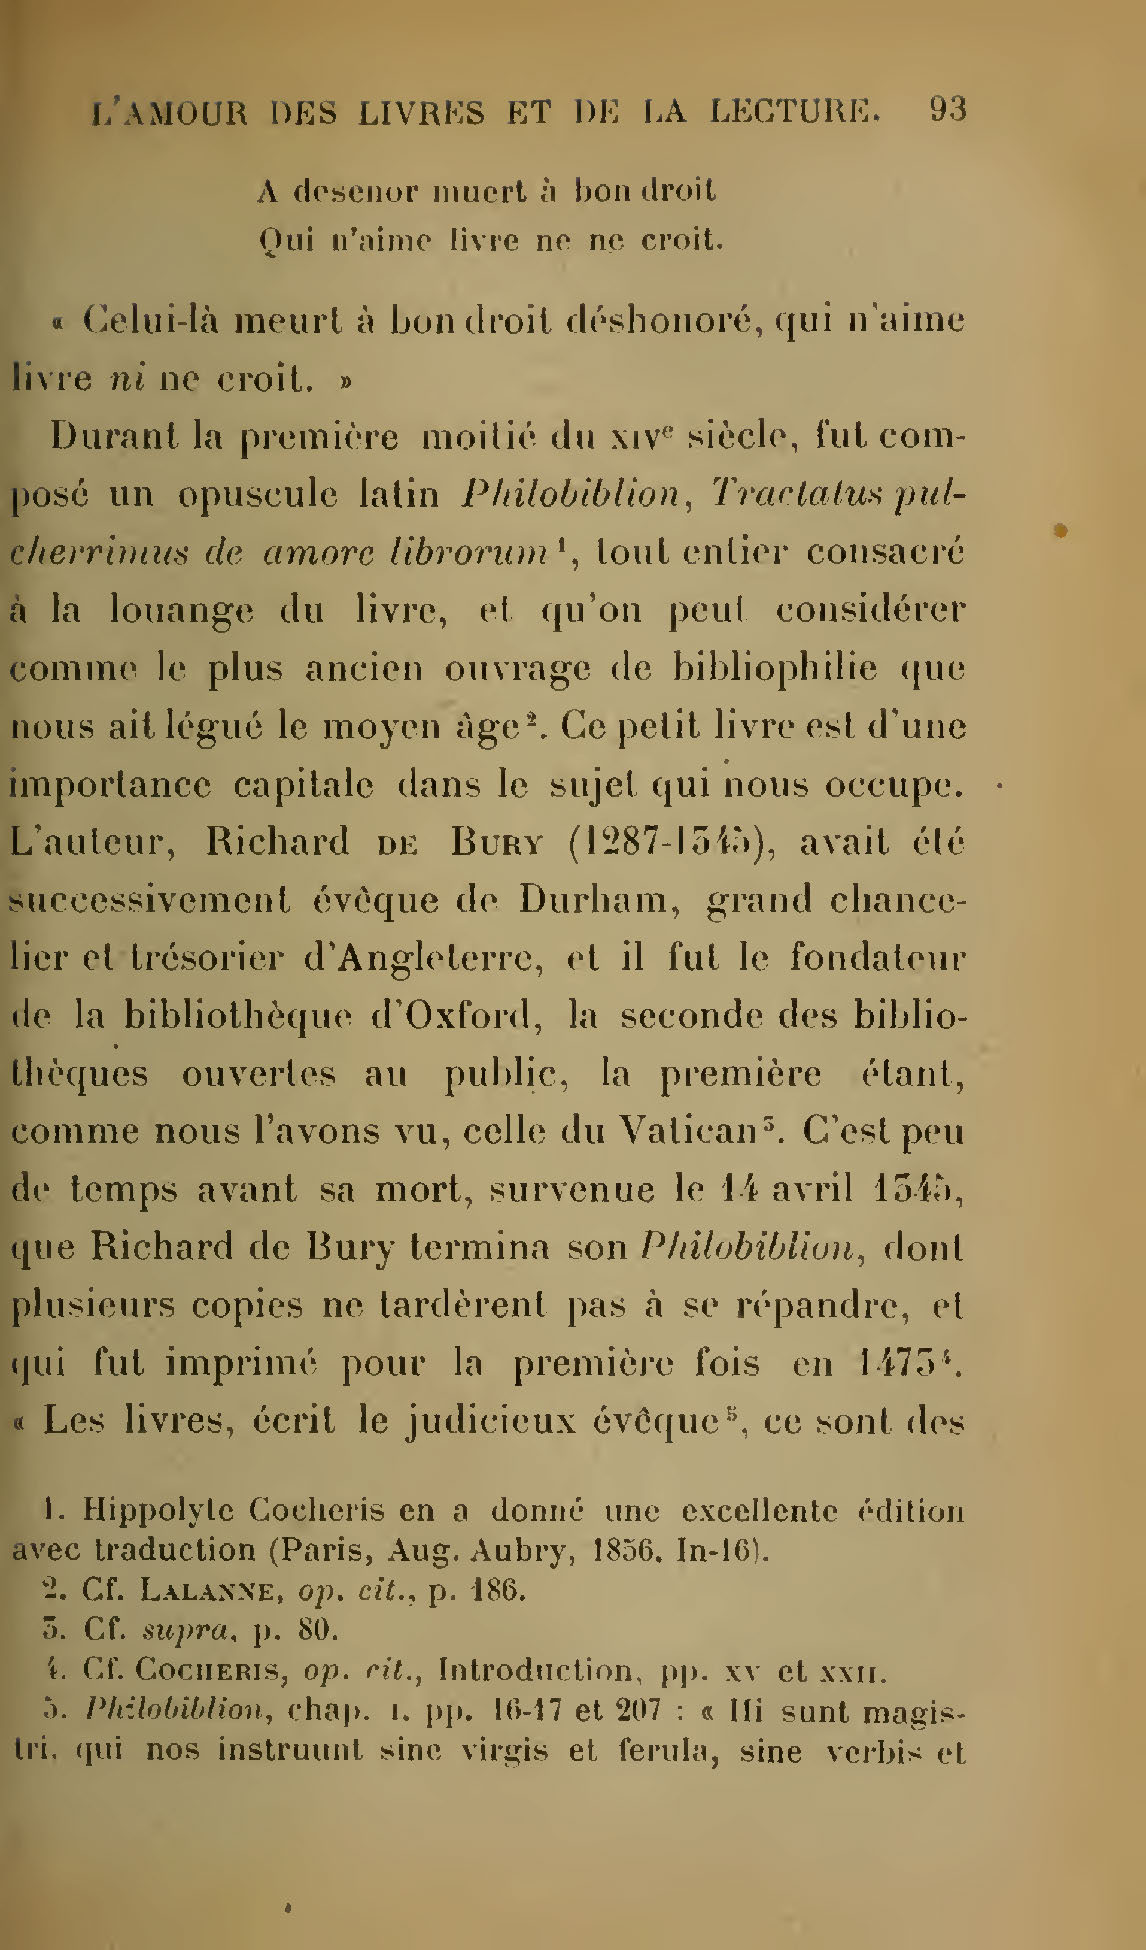 Albert Cim, Le Livre, t. I, p. 93.